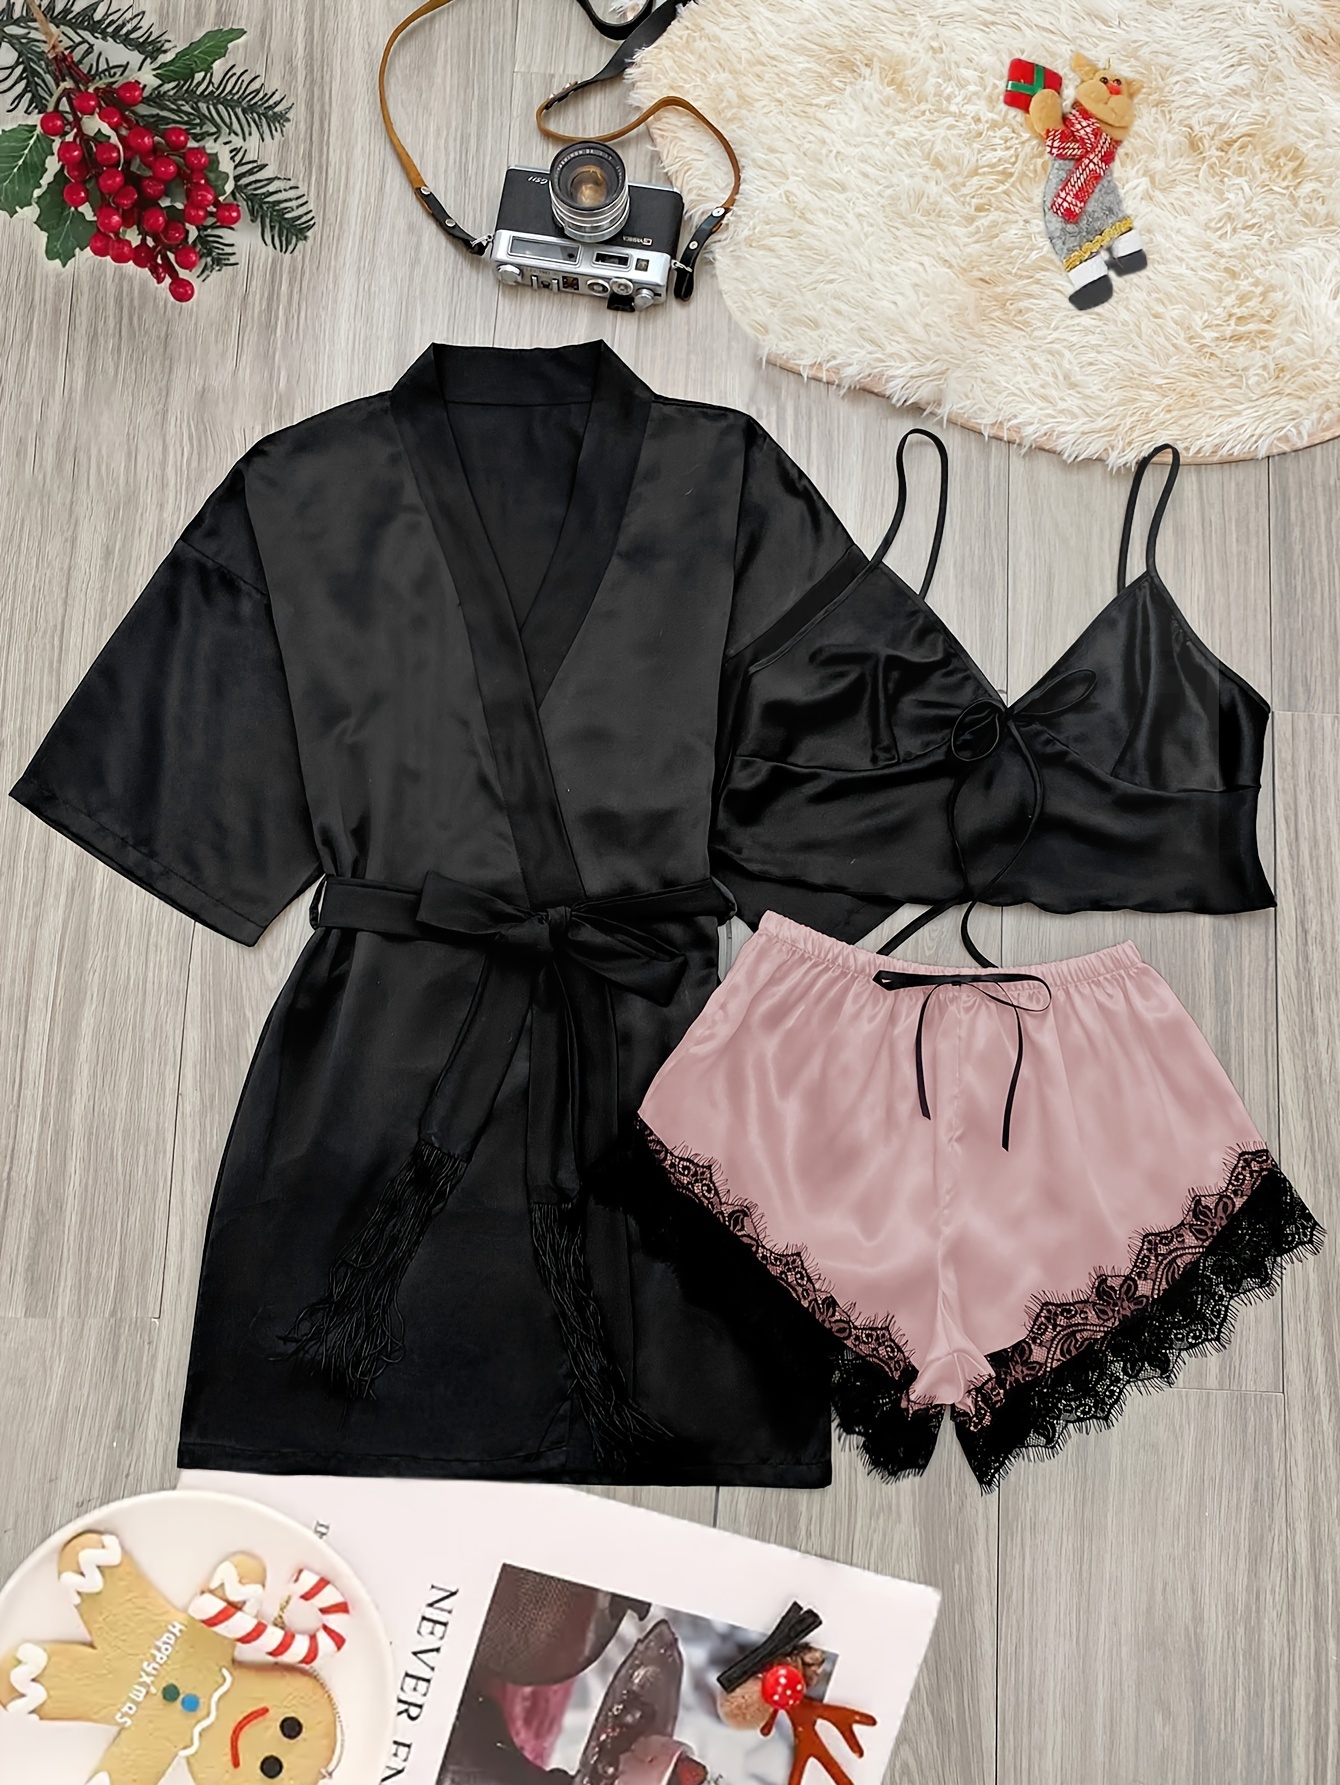 Women's Black Lace Satin Sleepwear Cami Top and Shorts Pajamas Set